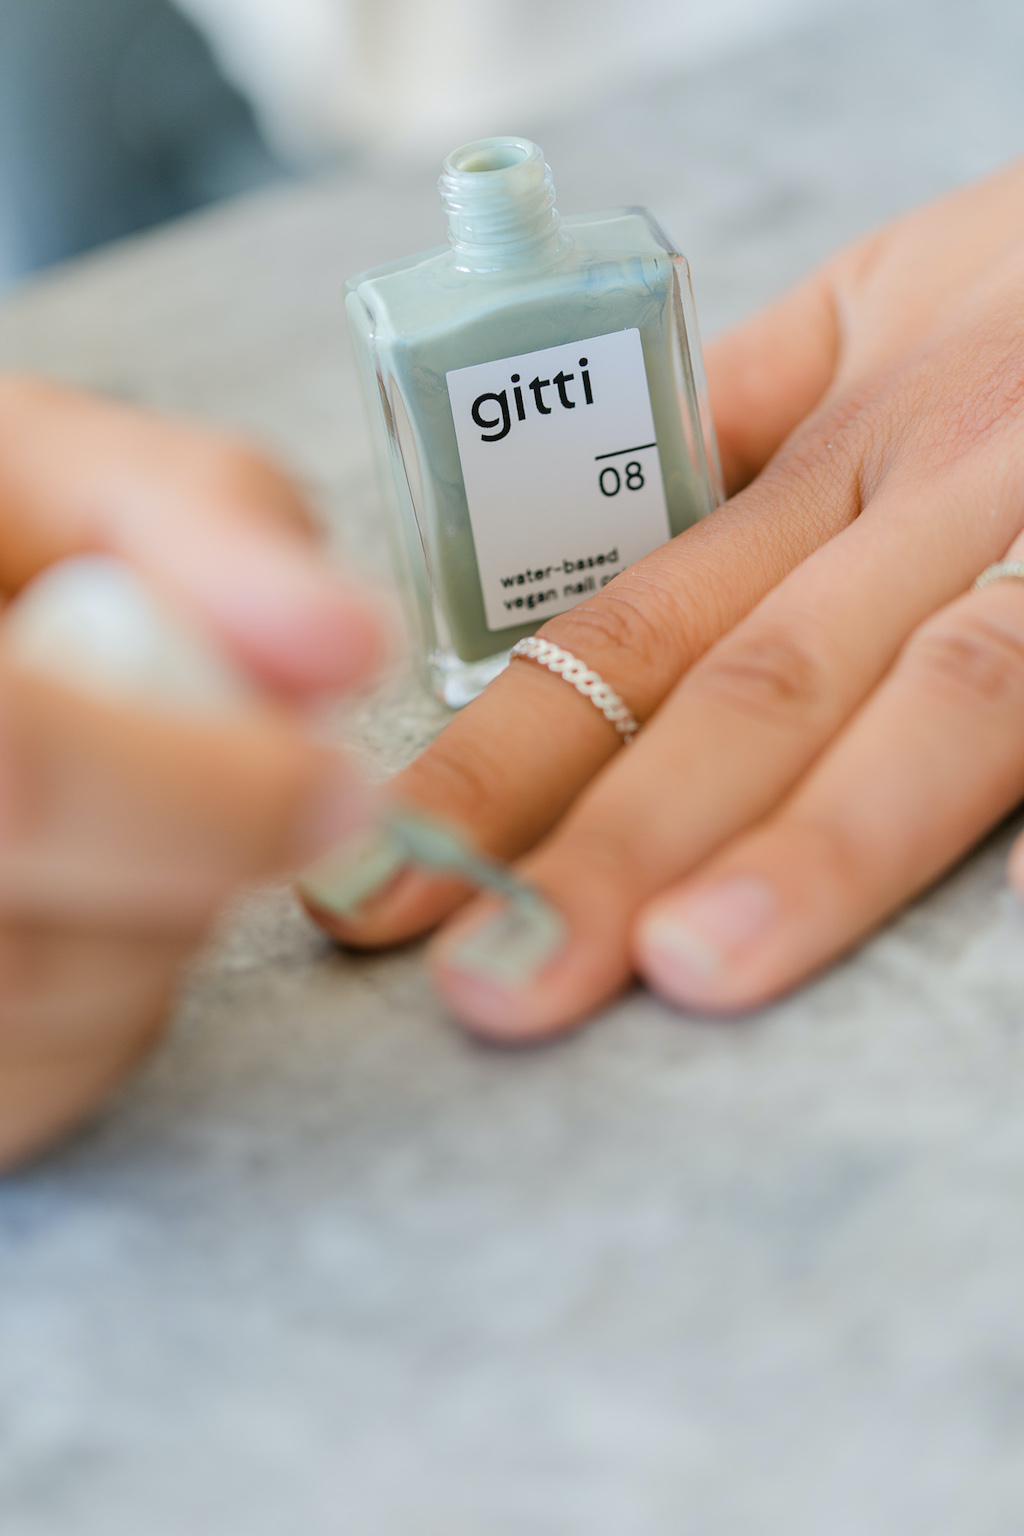 Gitti Fingernaegel lackieren water-based Nagellack | MamiBees